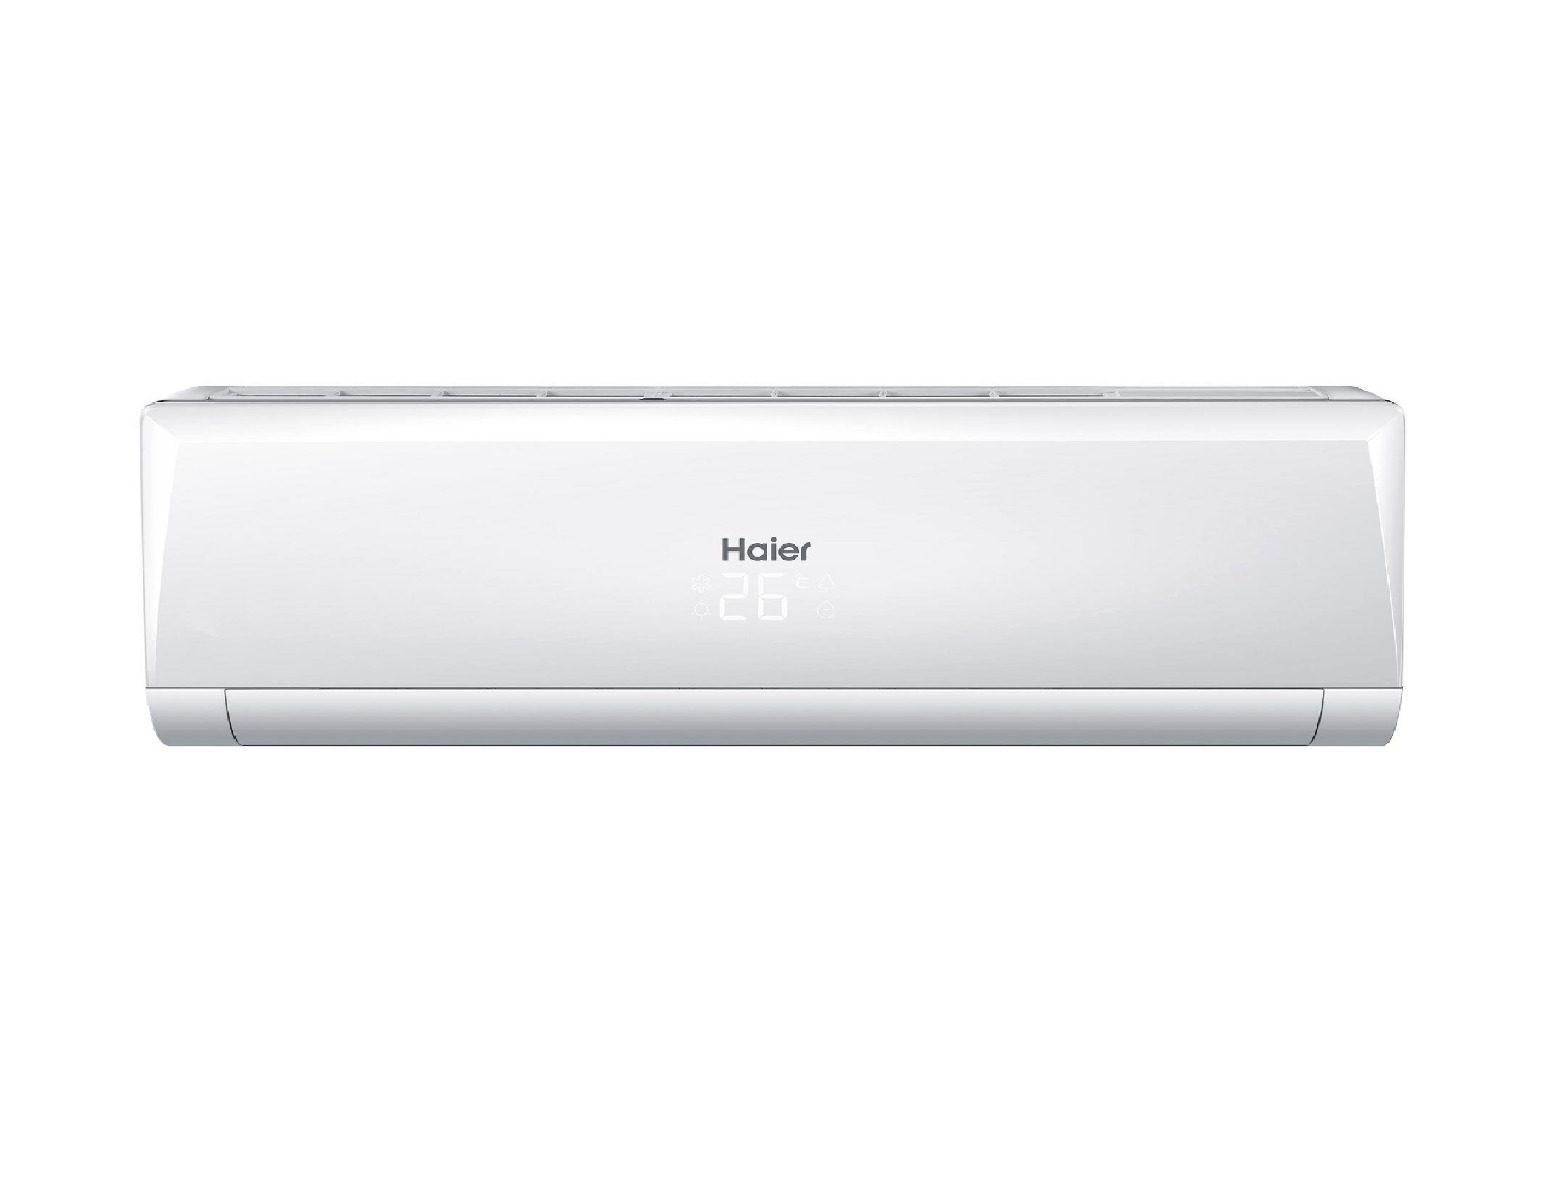 Haier Split  Air Conditioner 12600BTU, CoolOnly, Energy saver,Freon410, White - HSU-12LNX13/R2-T3 